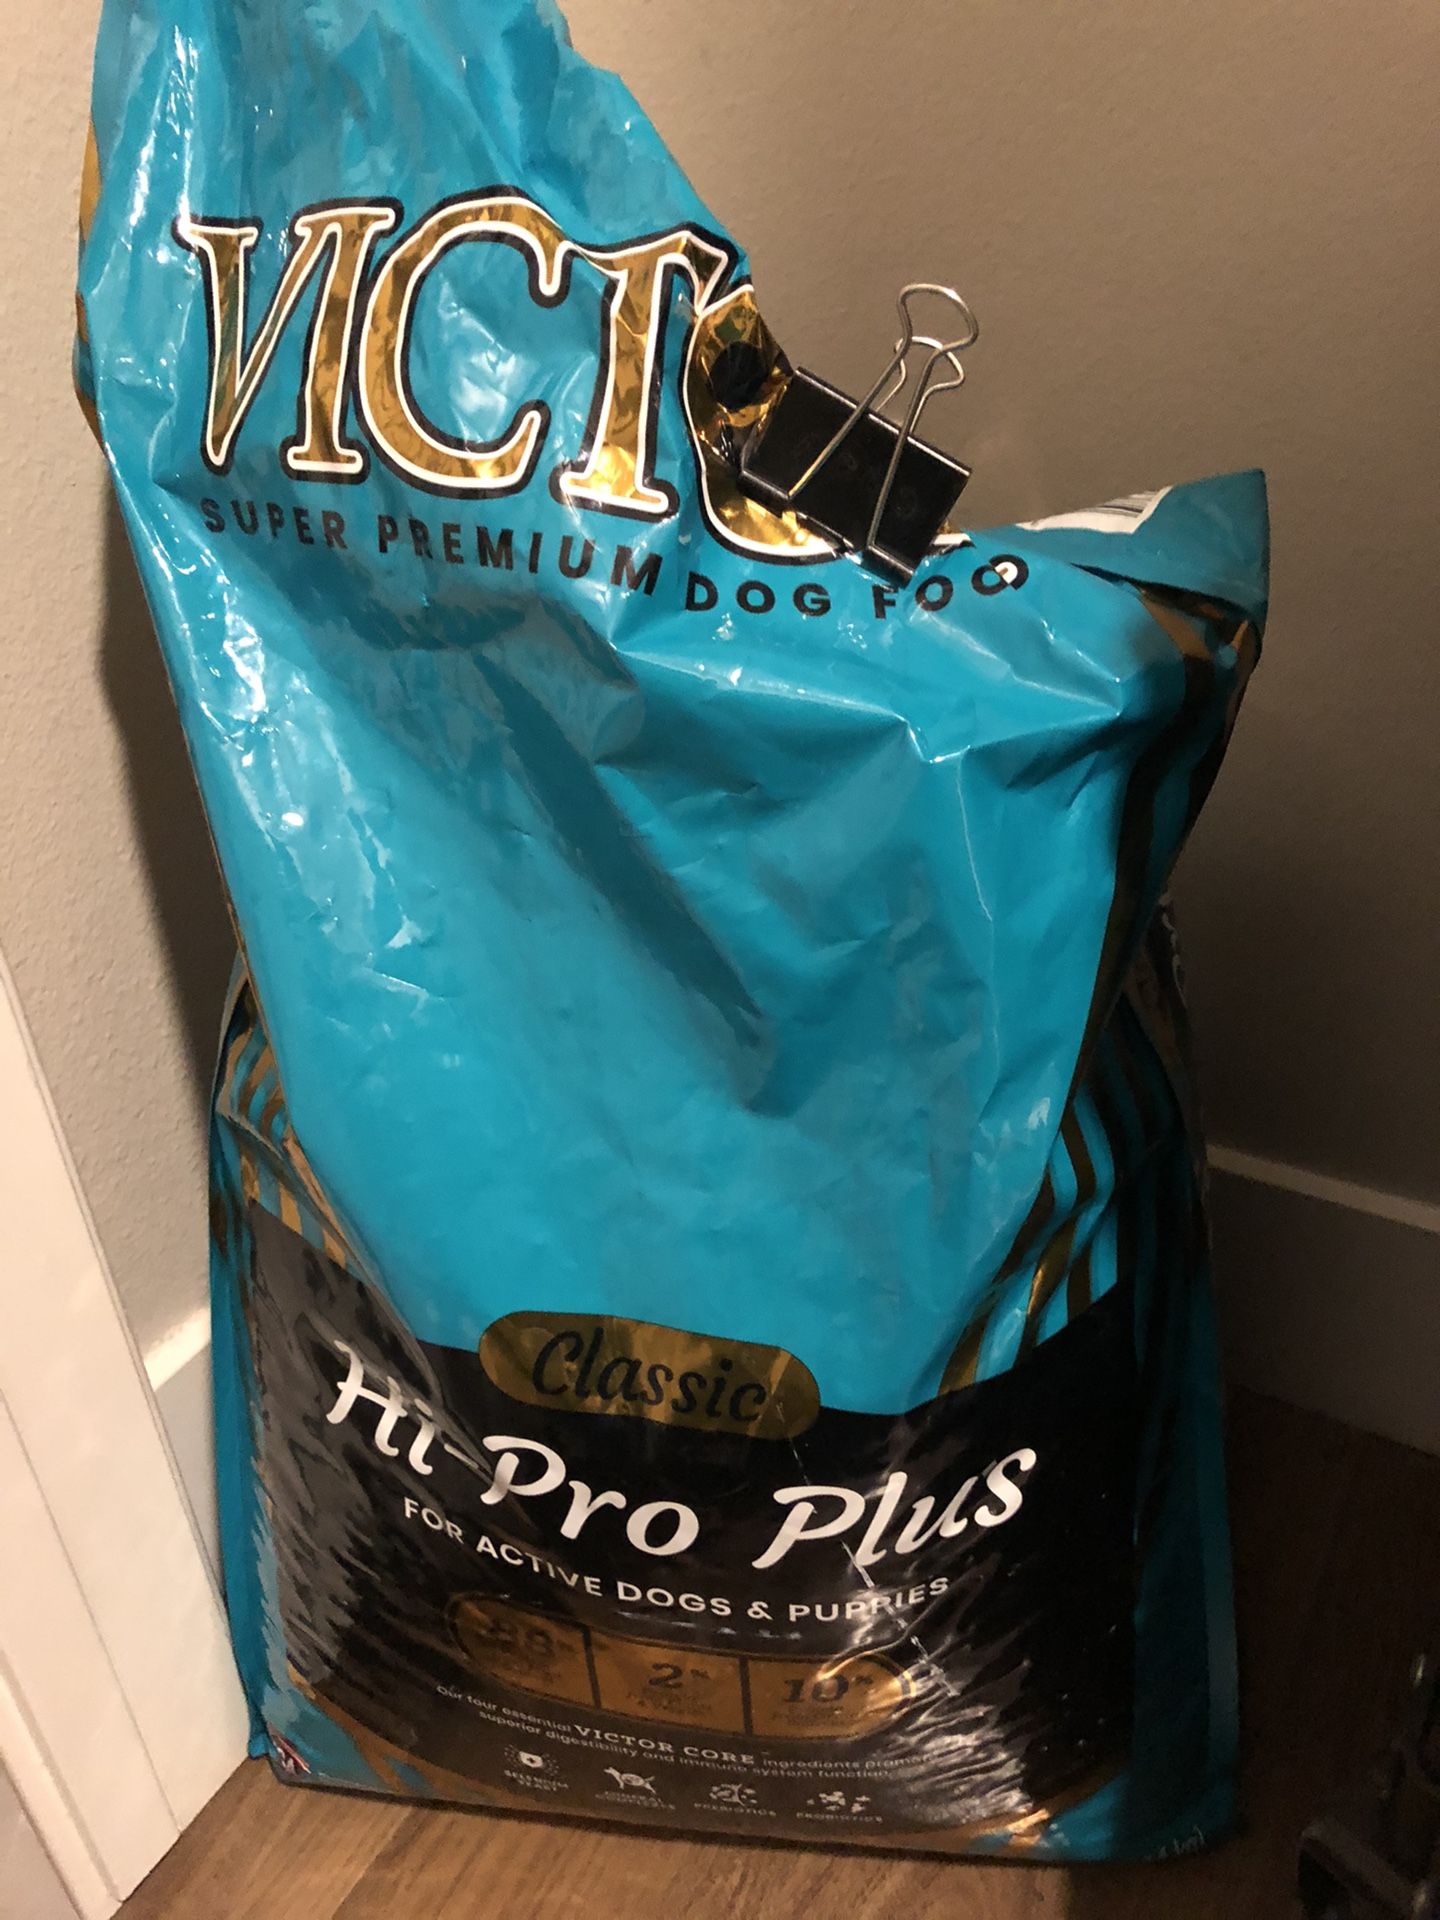 Victor Hi Pro Plus dog food, 40lb bag